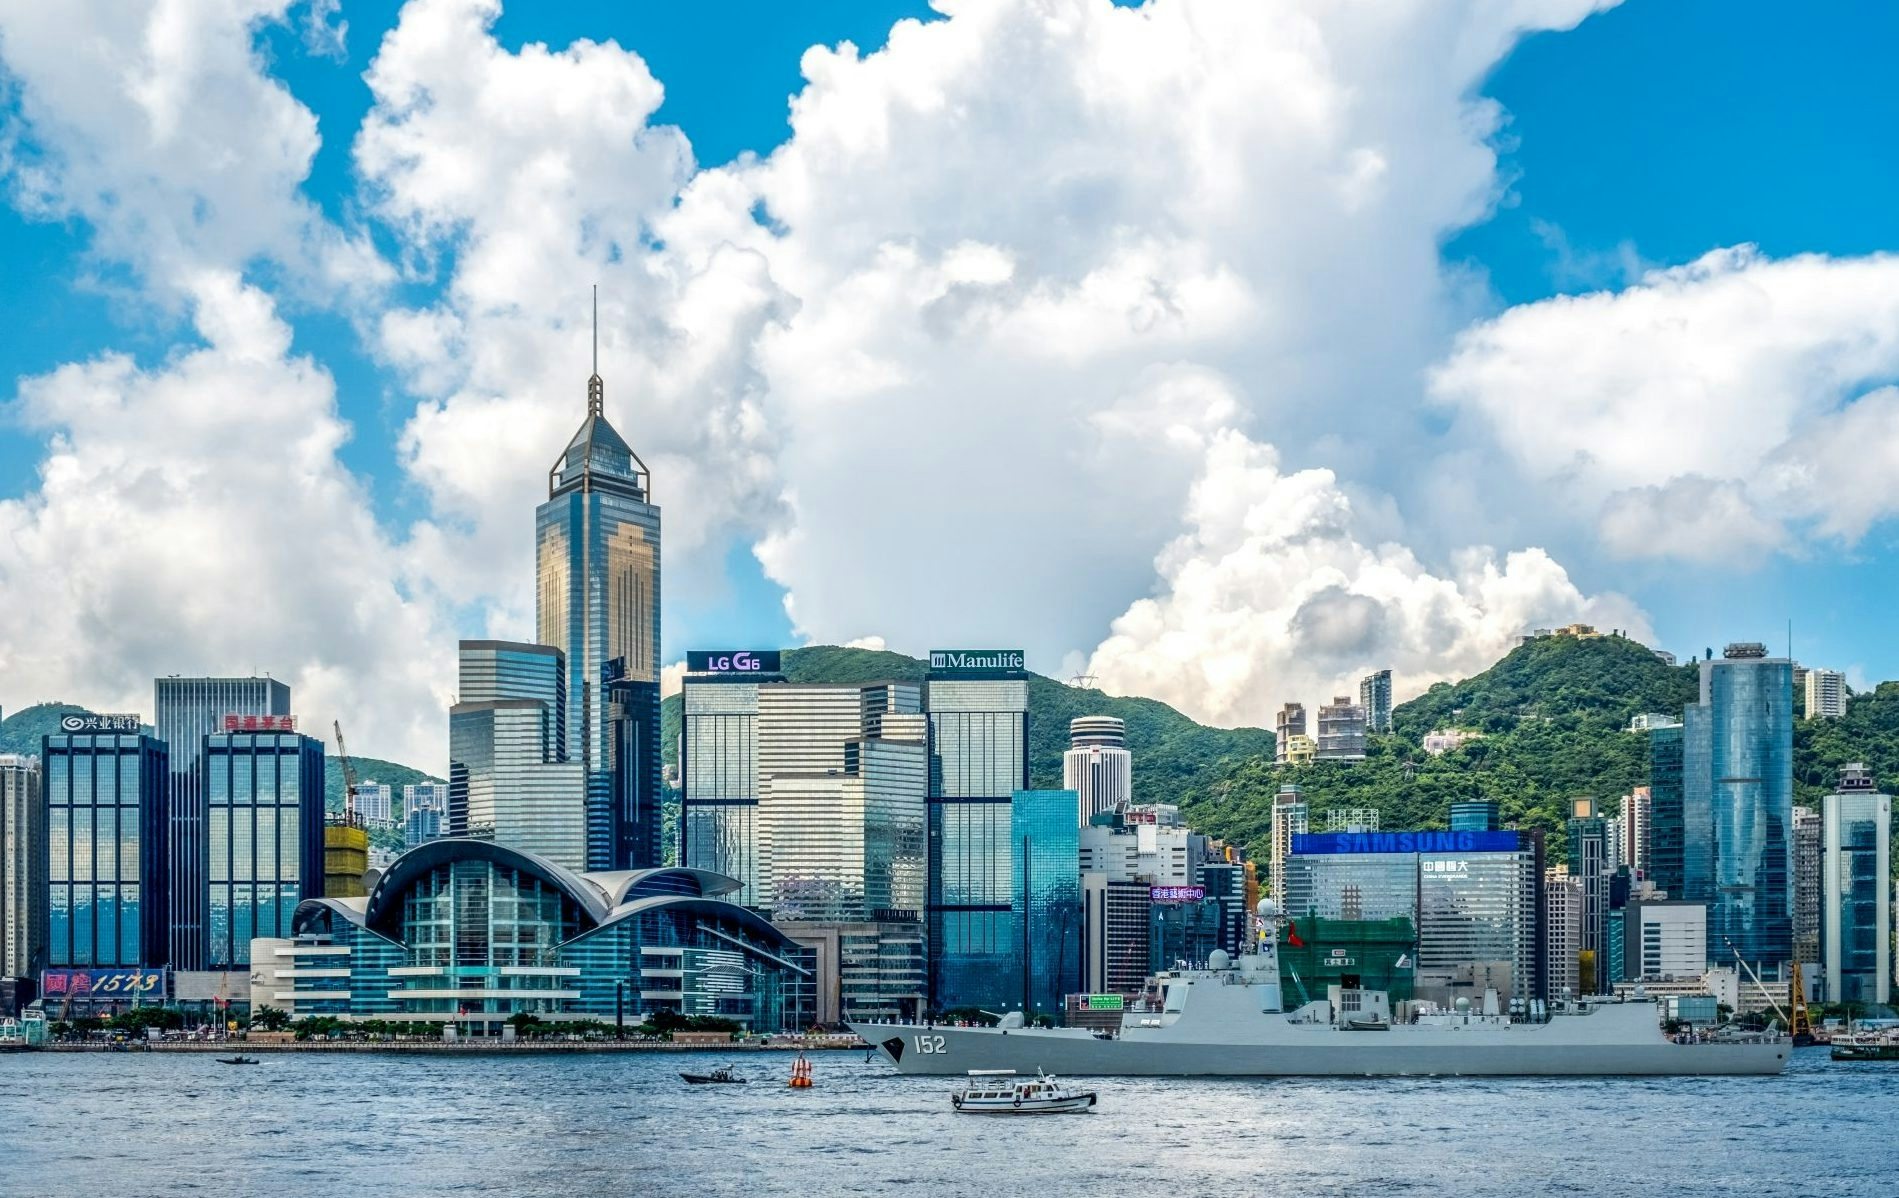 Hong Kong Victoria Harbour. Photo: EarnestTse/Shutterstock